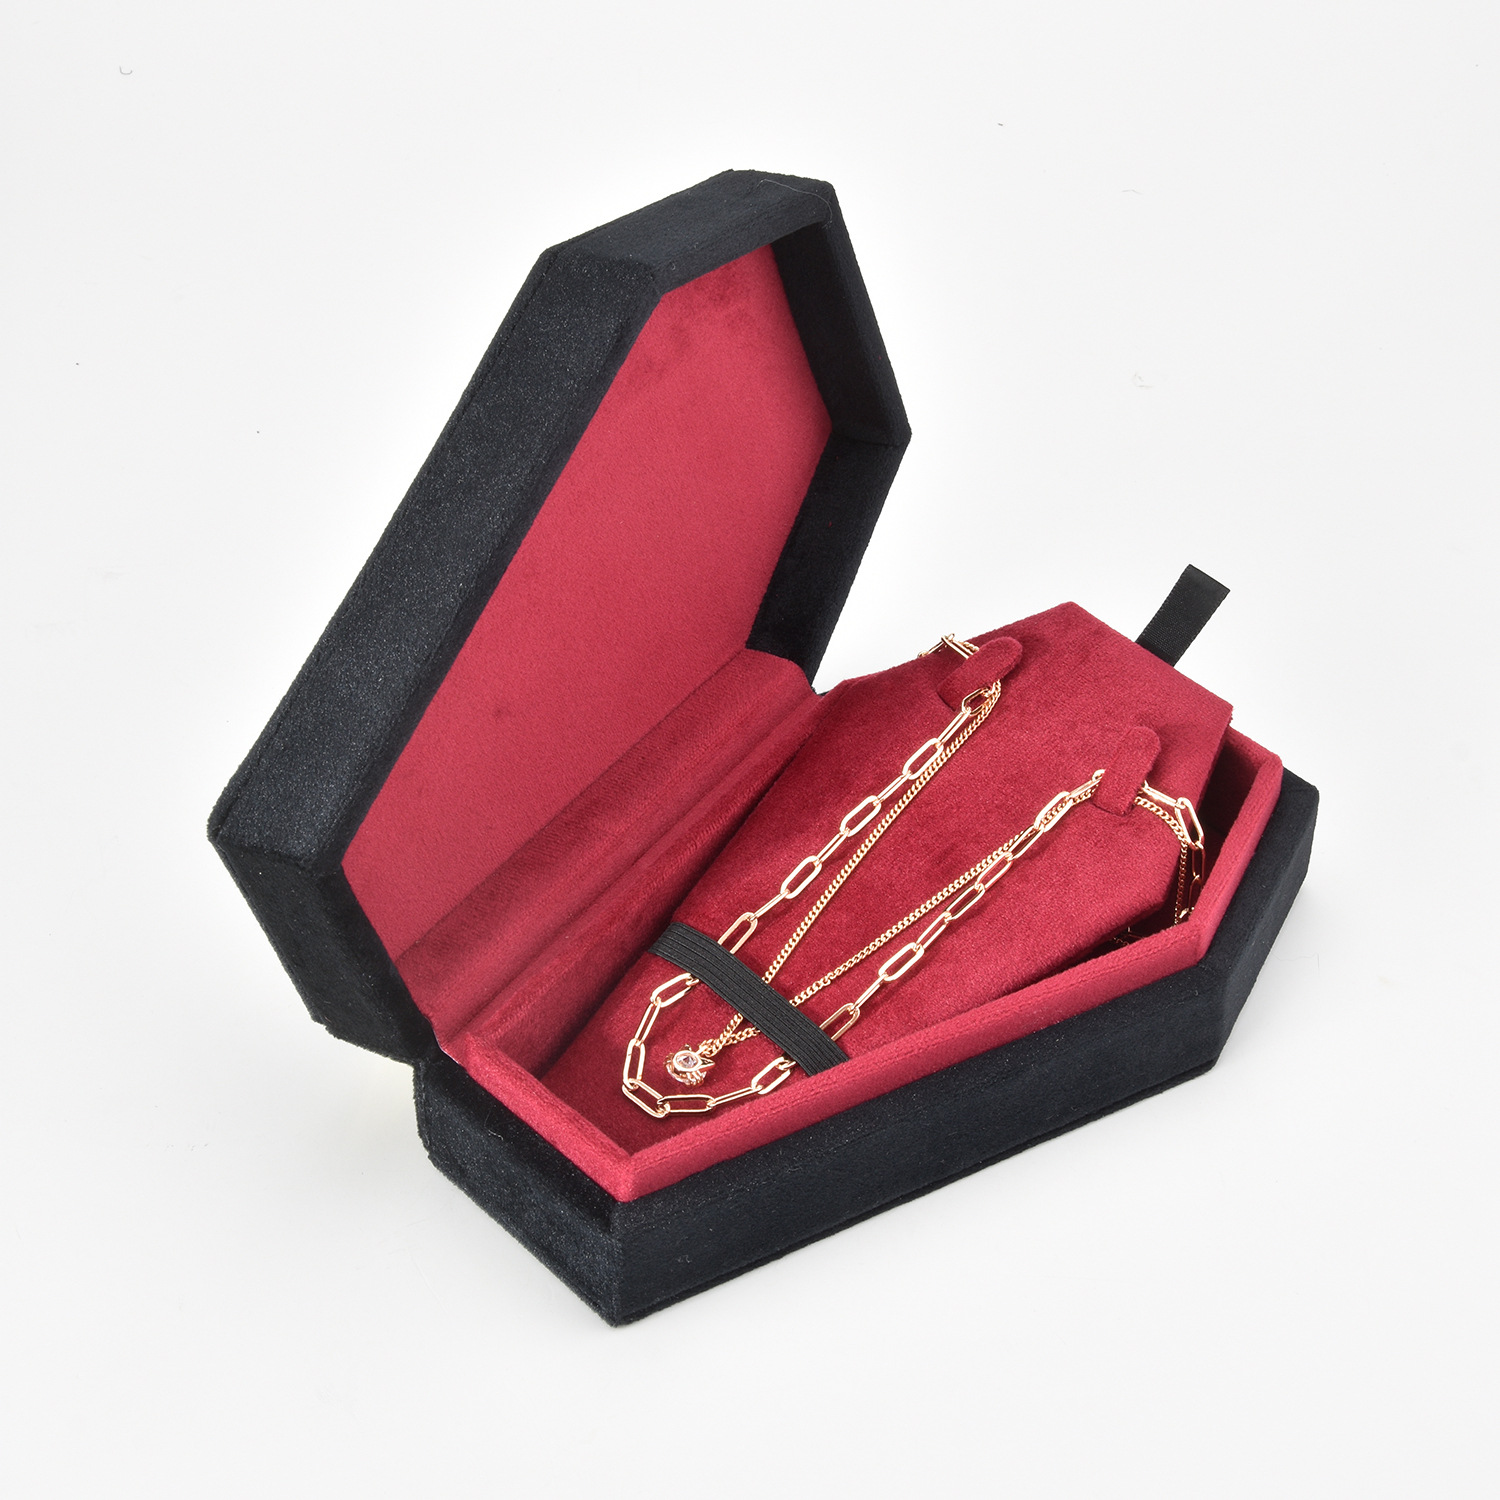 10:G90) velvet coffin-shaped (necklace) case